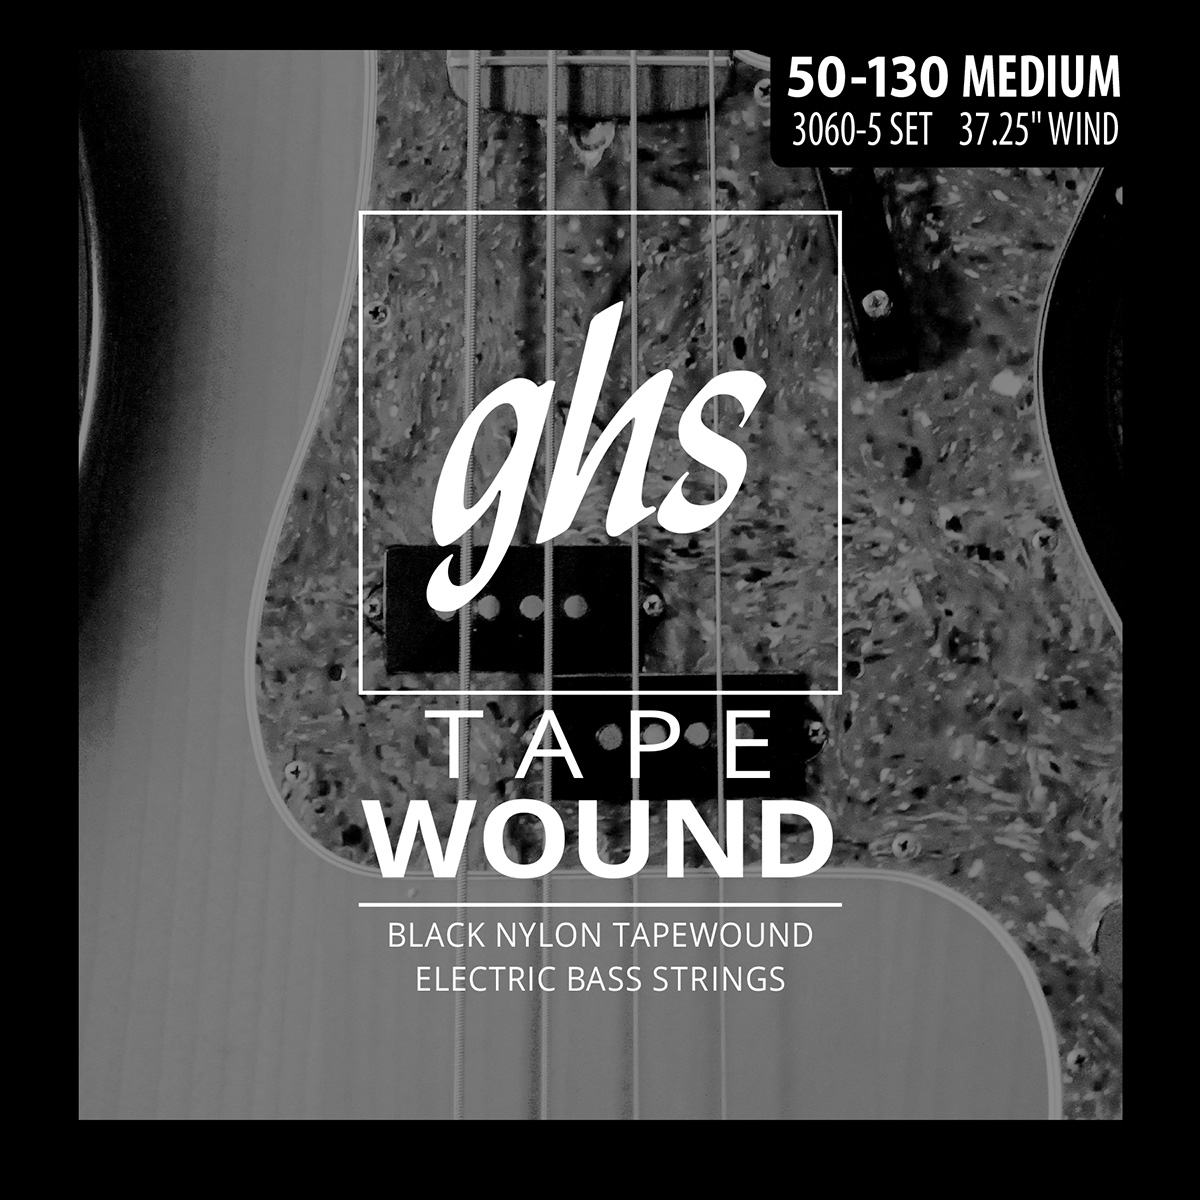 GHS 3060-5 Tape Wound - Electric Bass String Set, 5-String, Medium .050-130" - Black Nylon Tape Wound